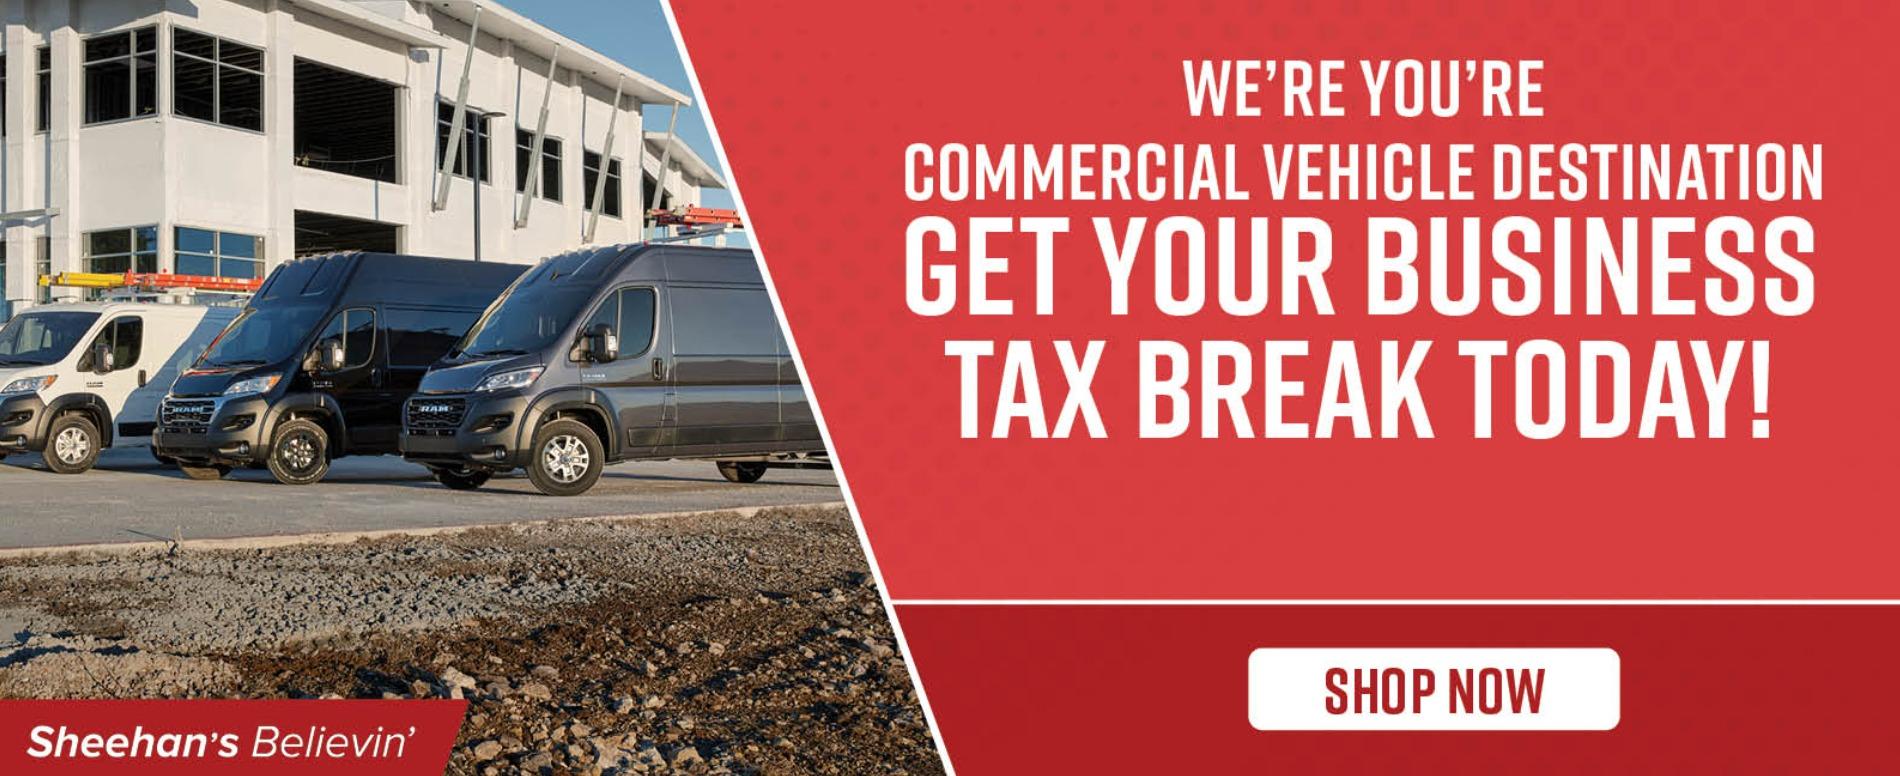 We're Your Commercial Vehicle Destination